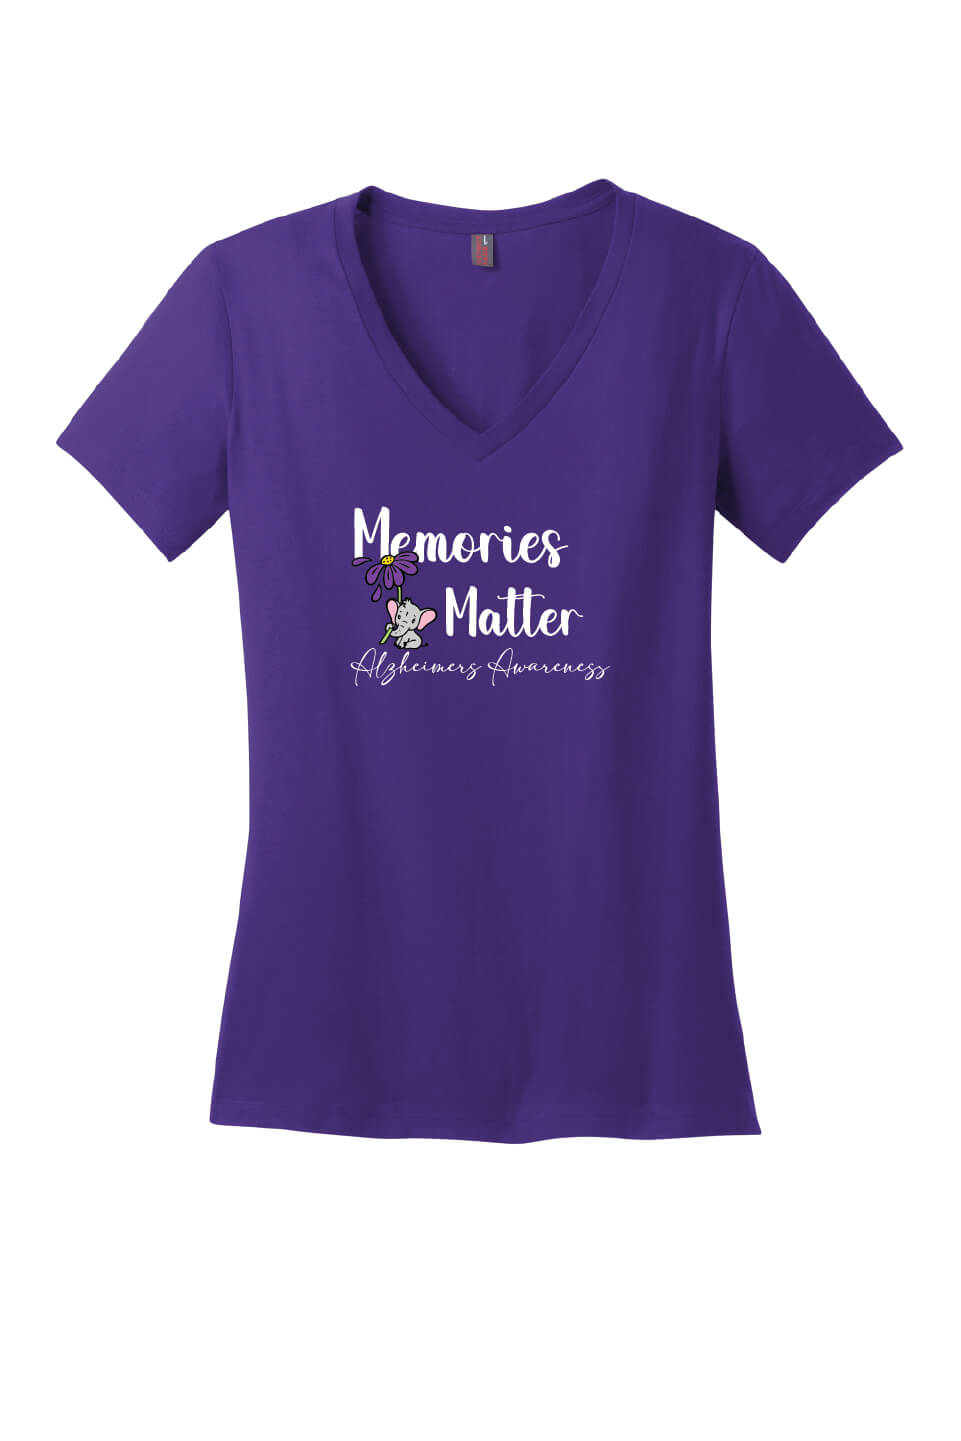 Memories Matter - Alzheimers Awareness Ladies V-Neck Short Sleeve T-Shirt purple